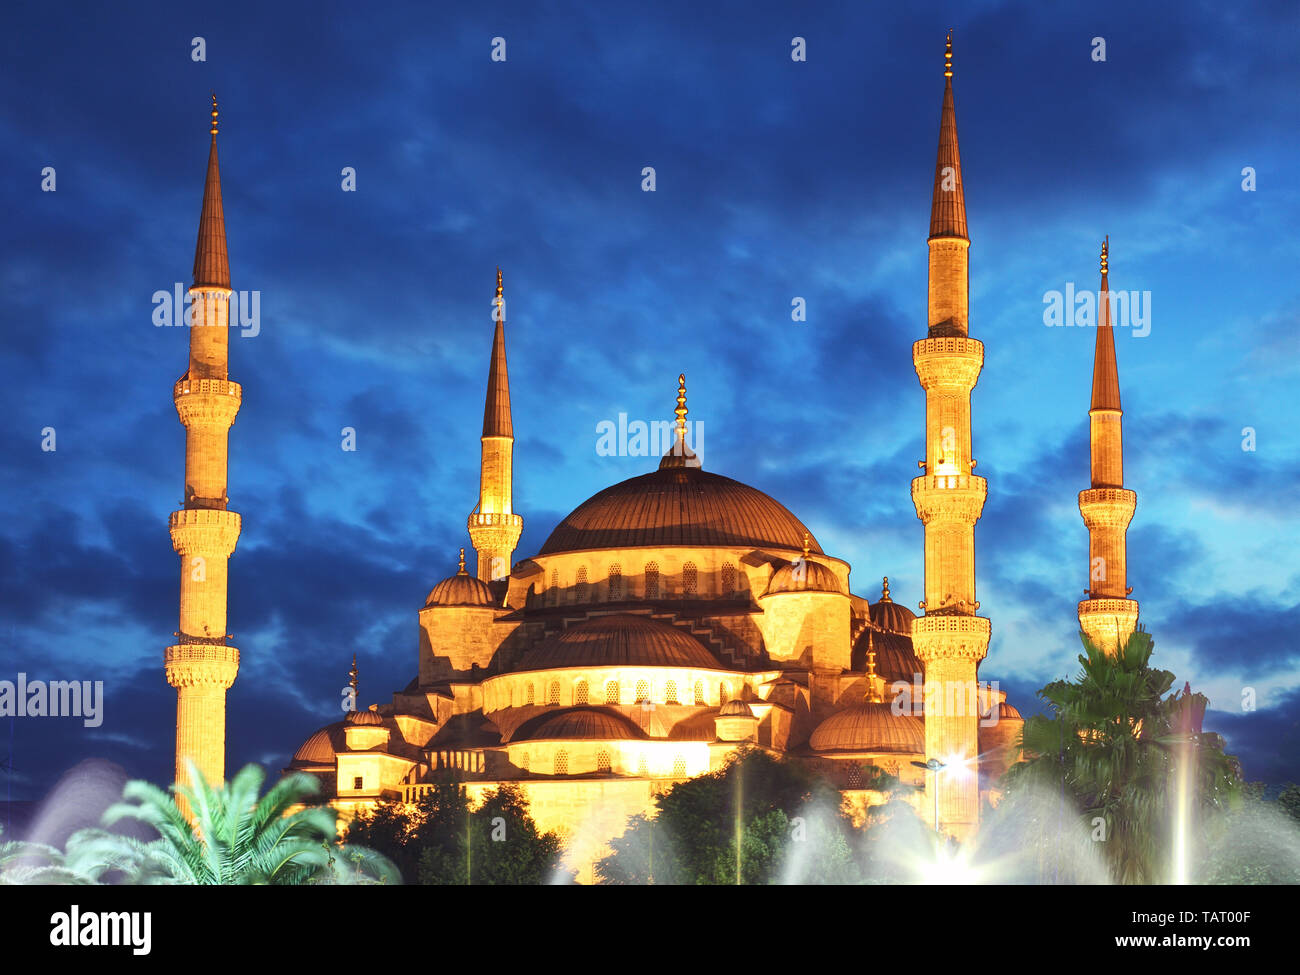 Blaue Moschee bei Nacht in Istanbul - Türkei Stockfoto